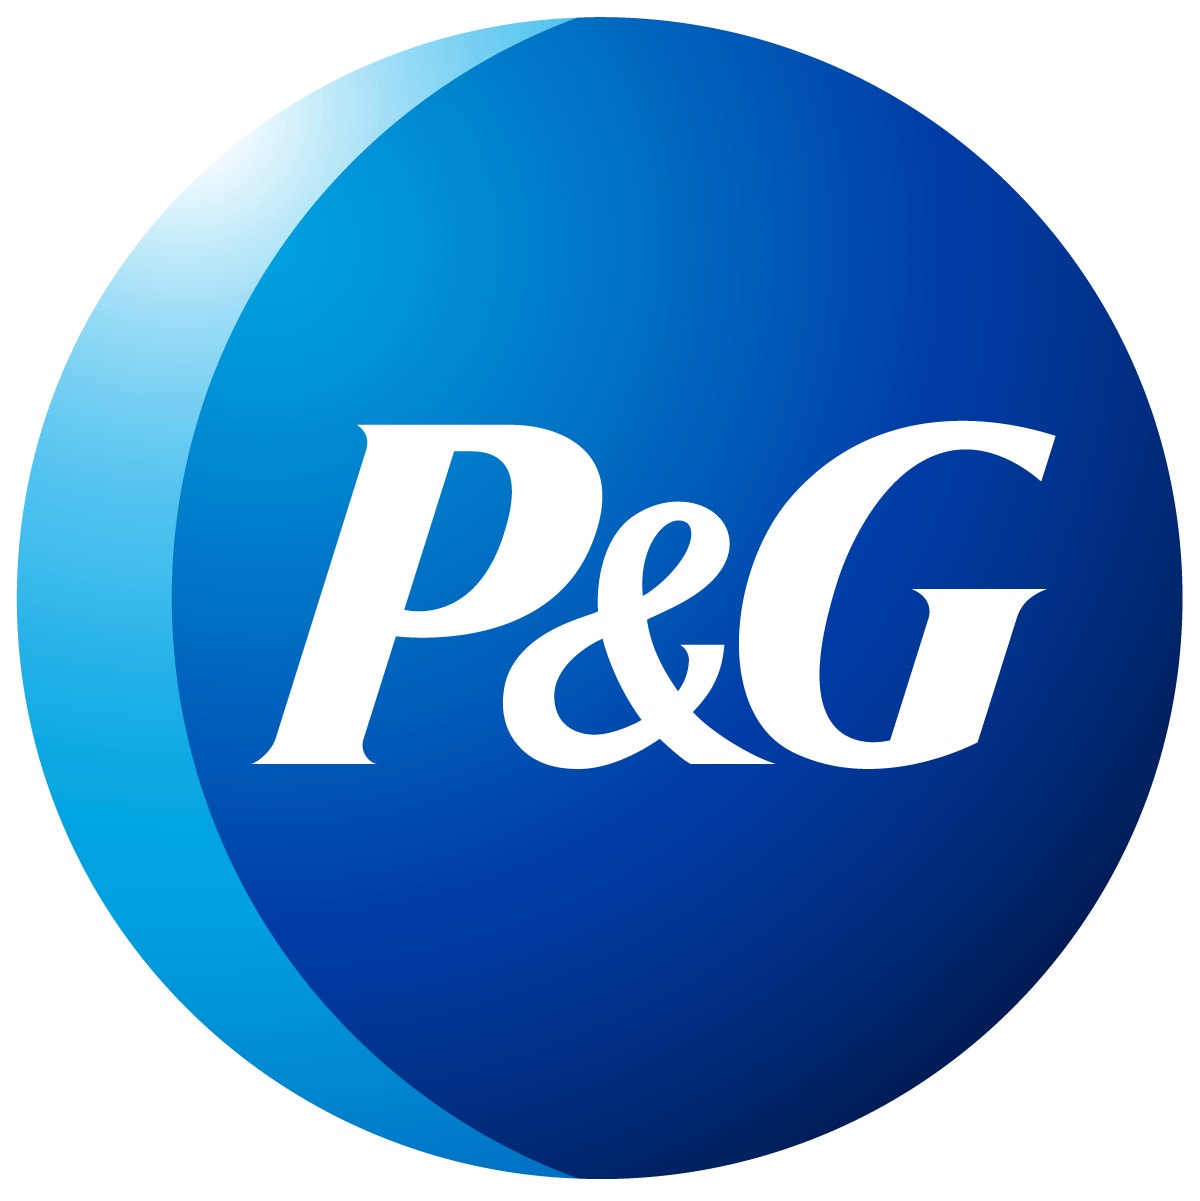 Gillette Maker Procter & Gamble's Q2 Revenue Tops Estimate By A Whisker; Bottom-Line Matches Street View